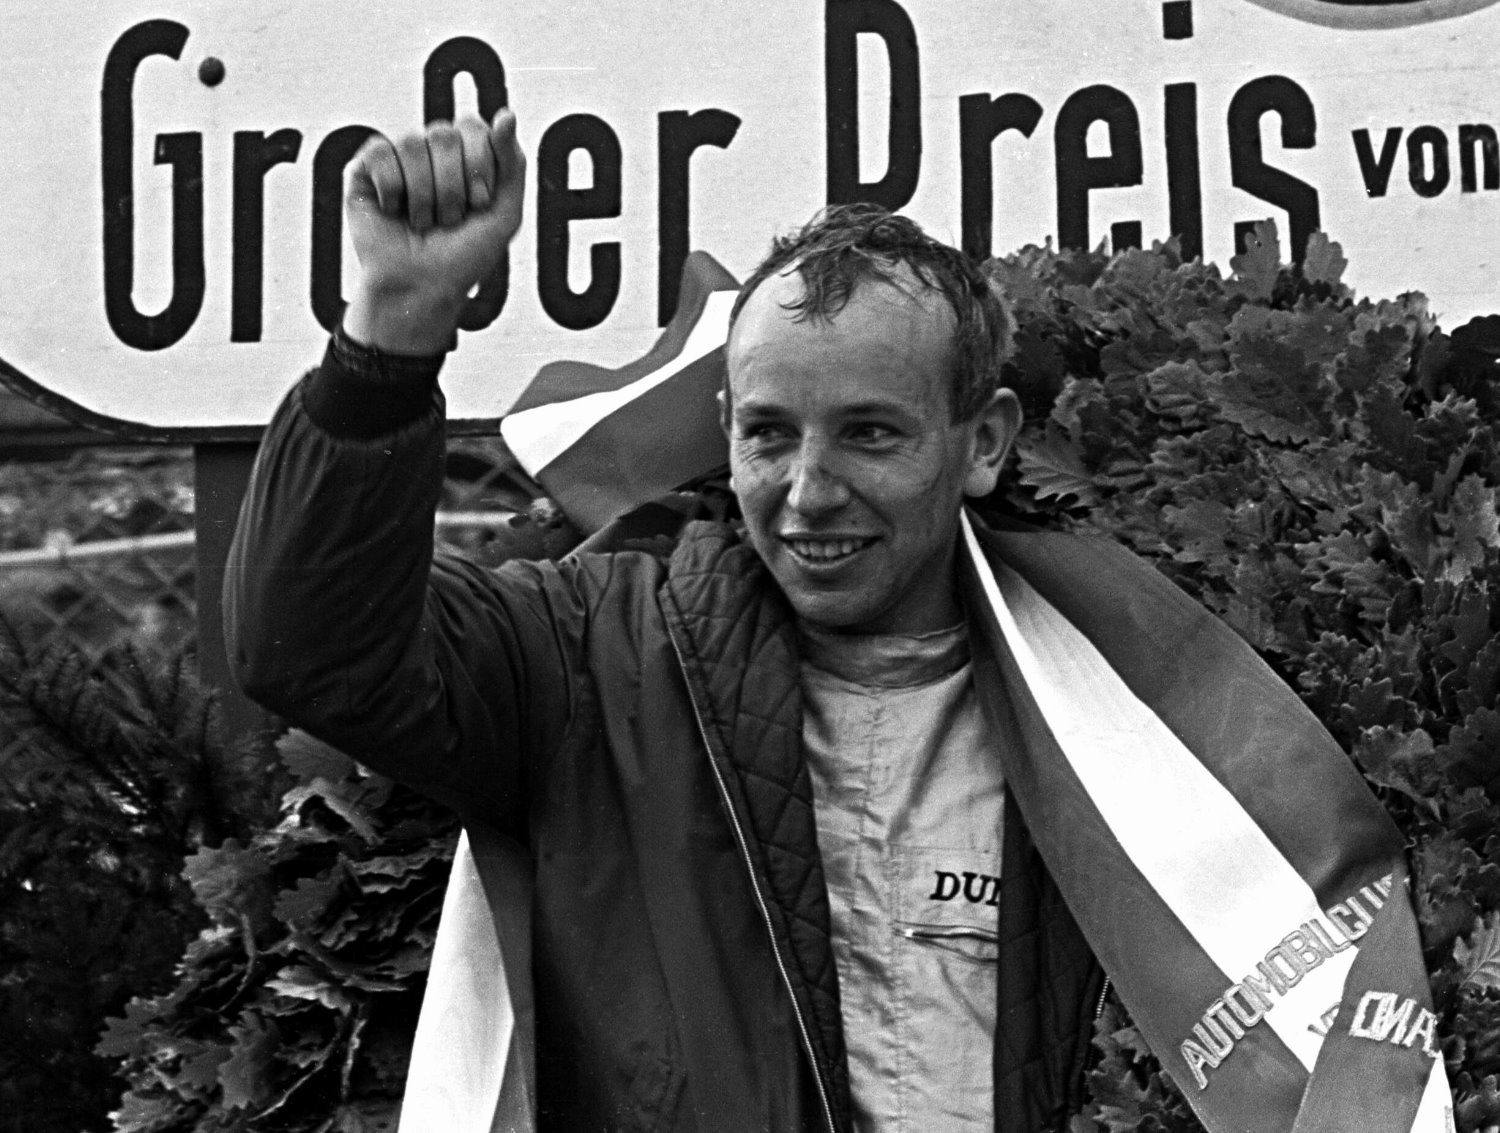 John Surtees winning the German GP